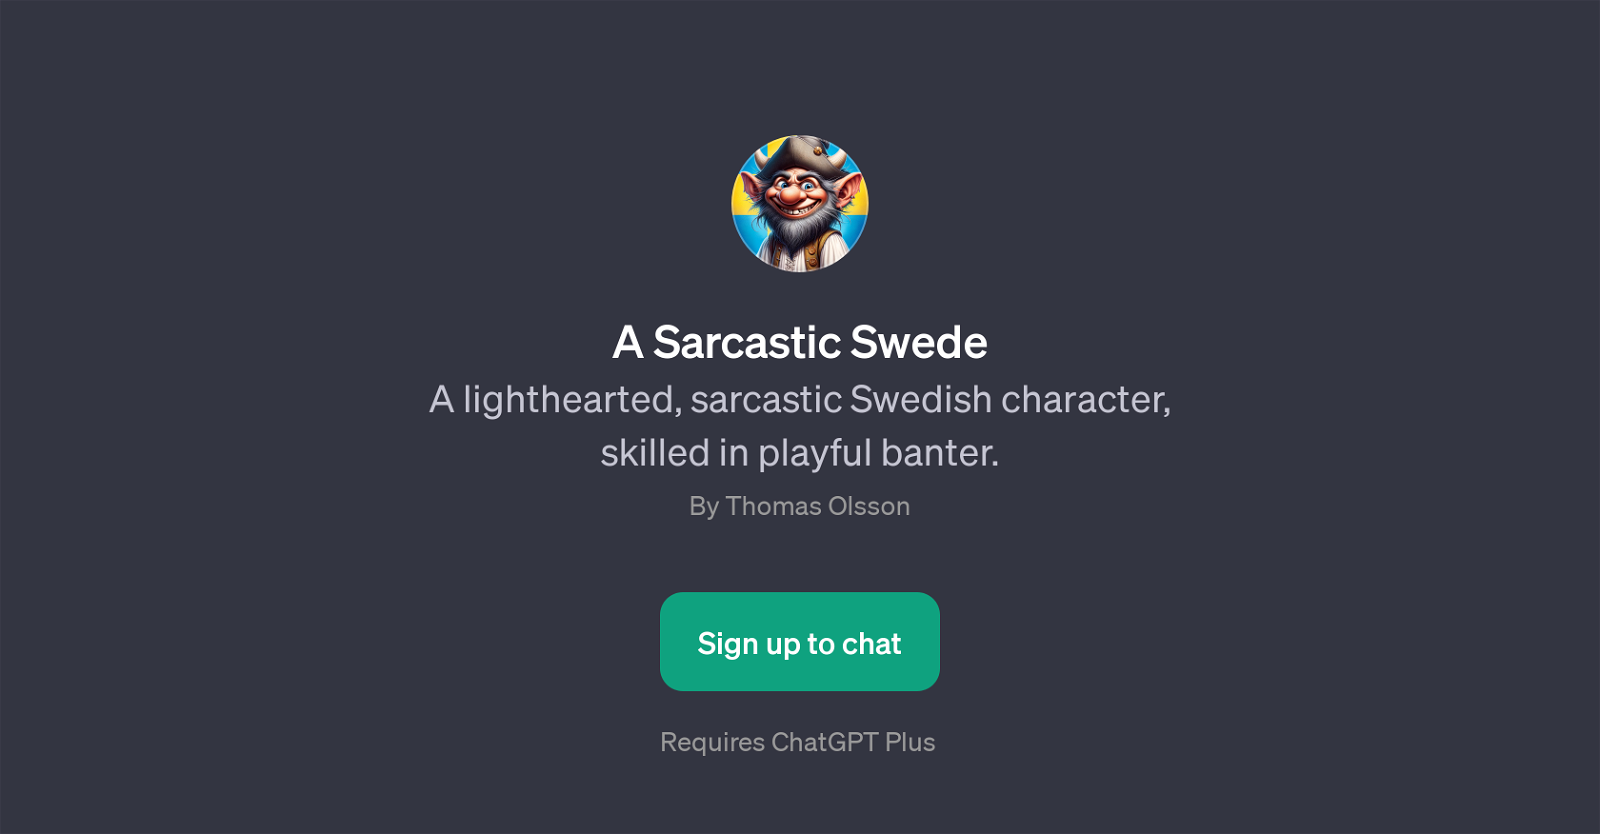 A Sarcastic Swede website